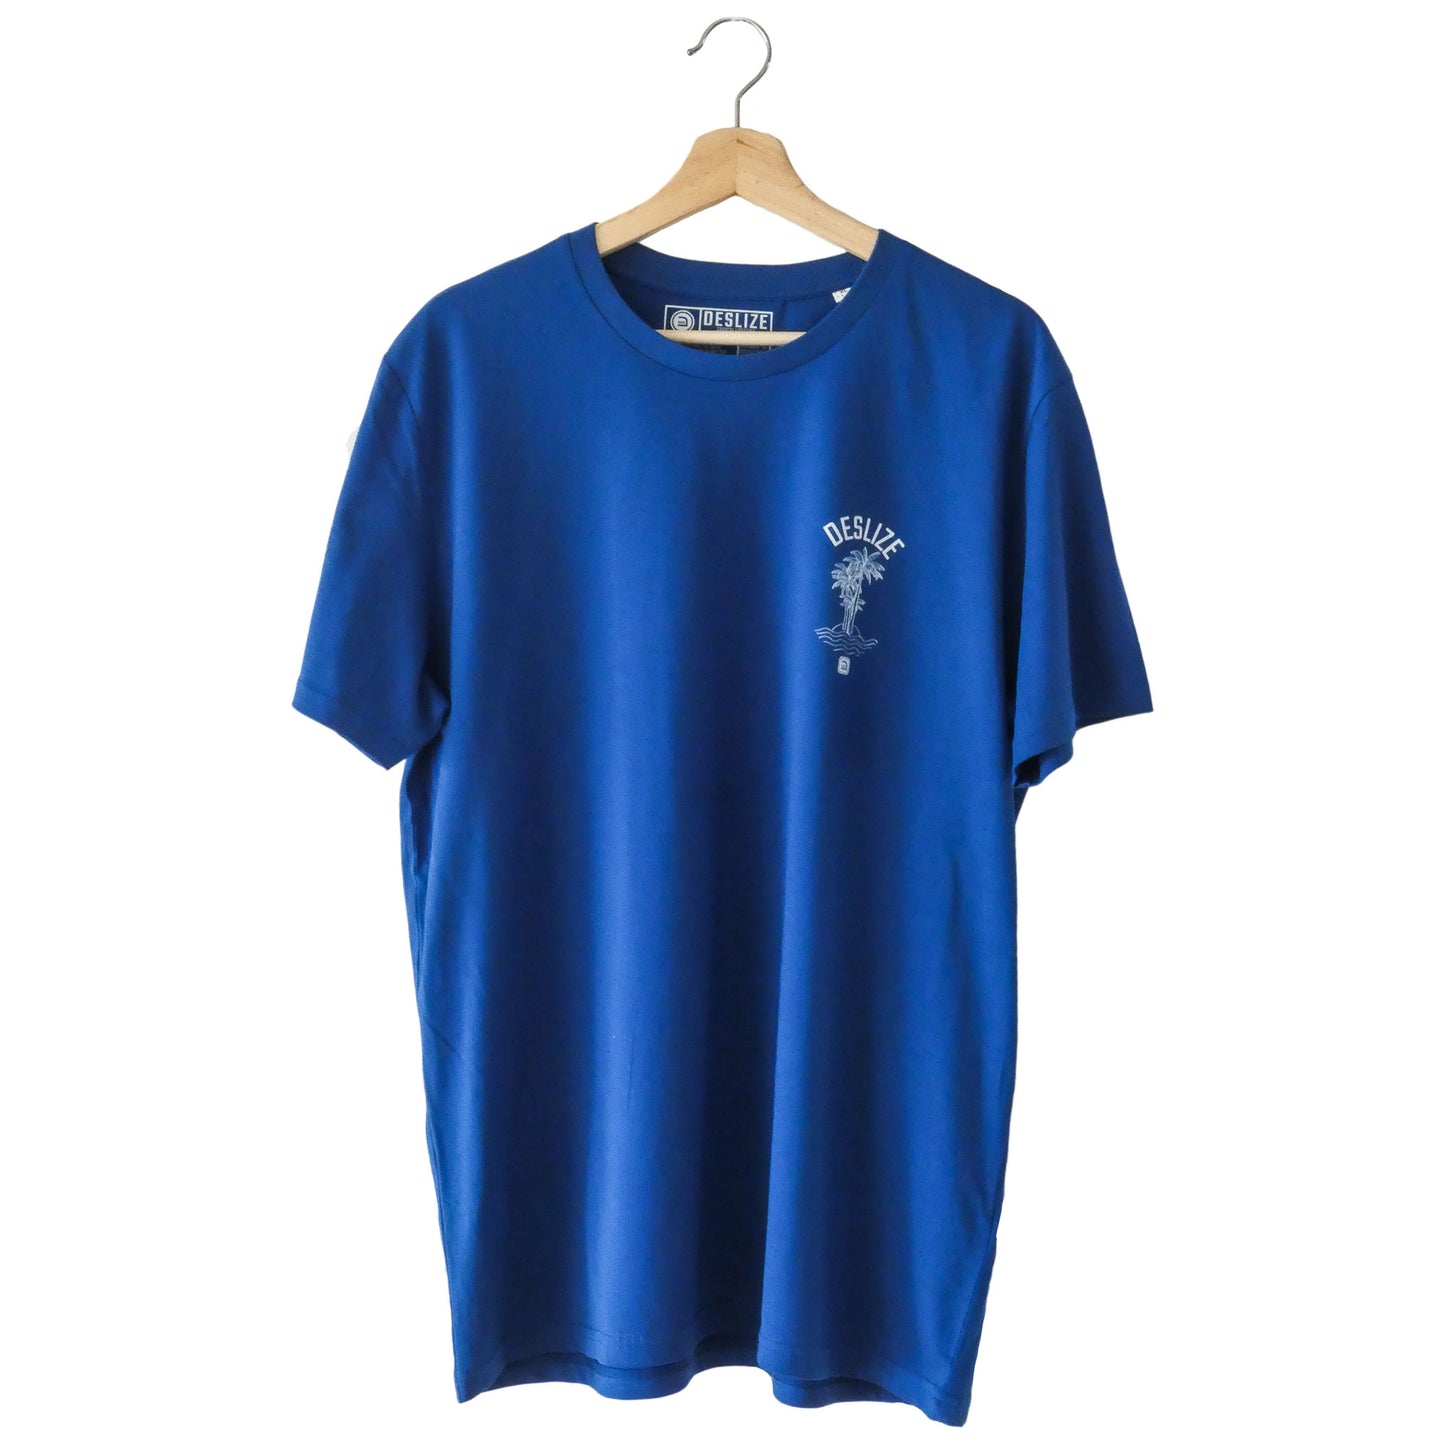 Supertubos blue tshirt, front side